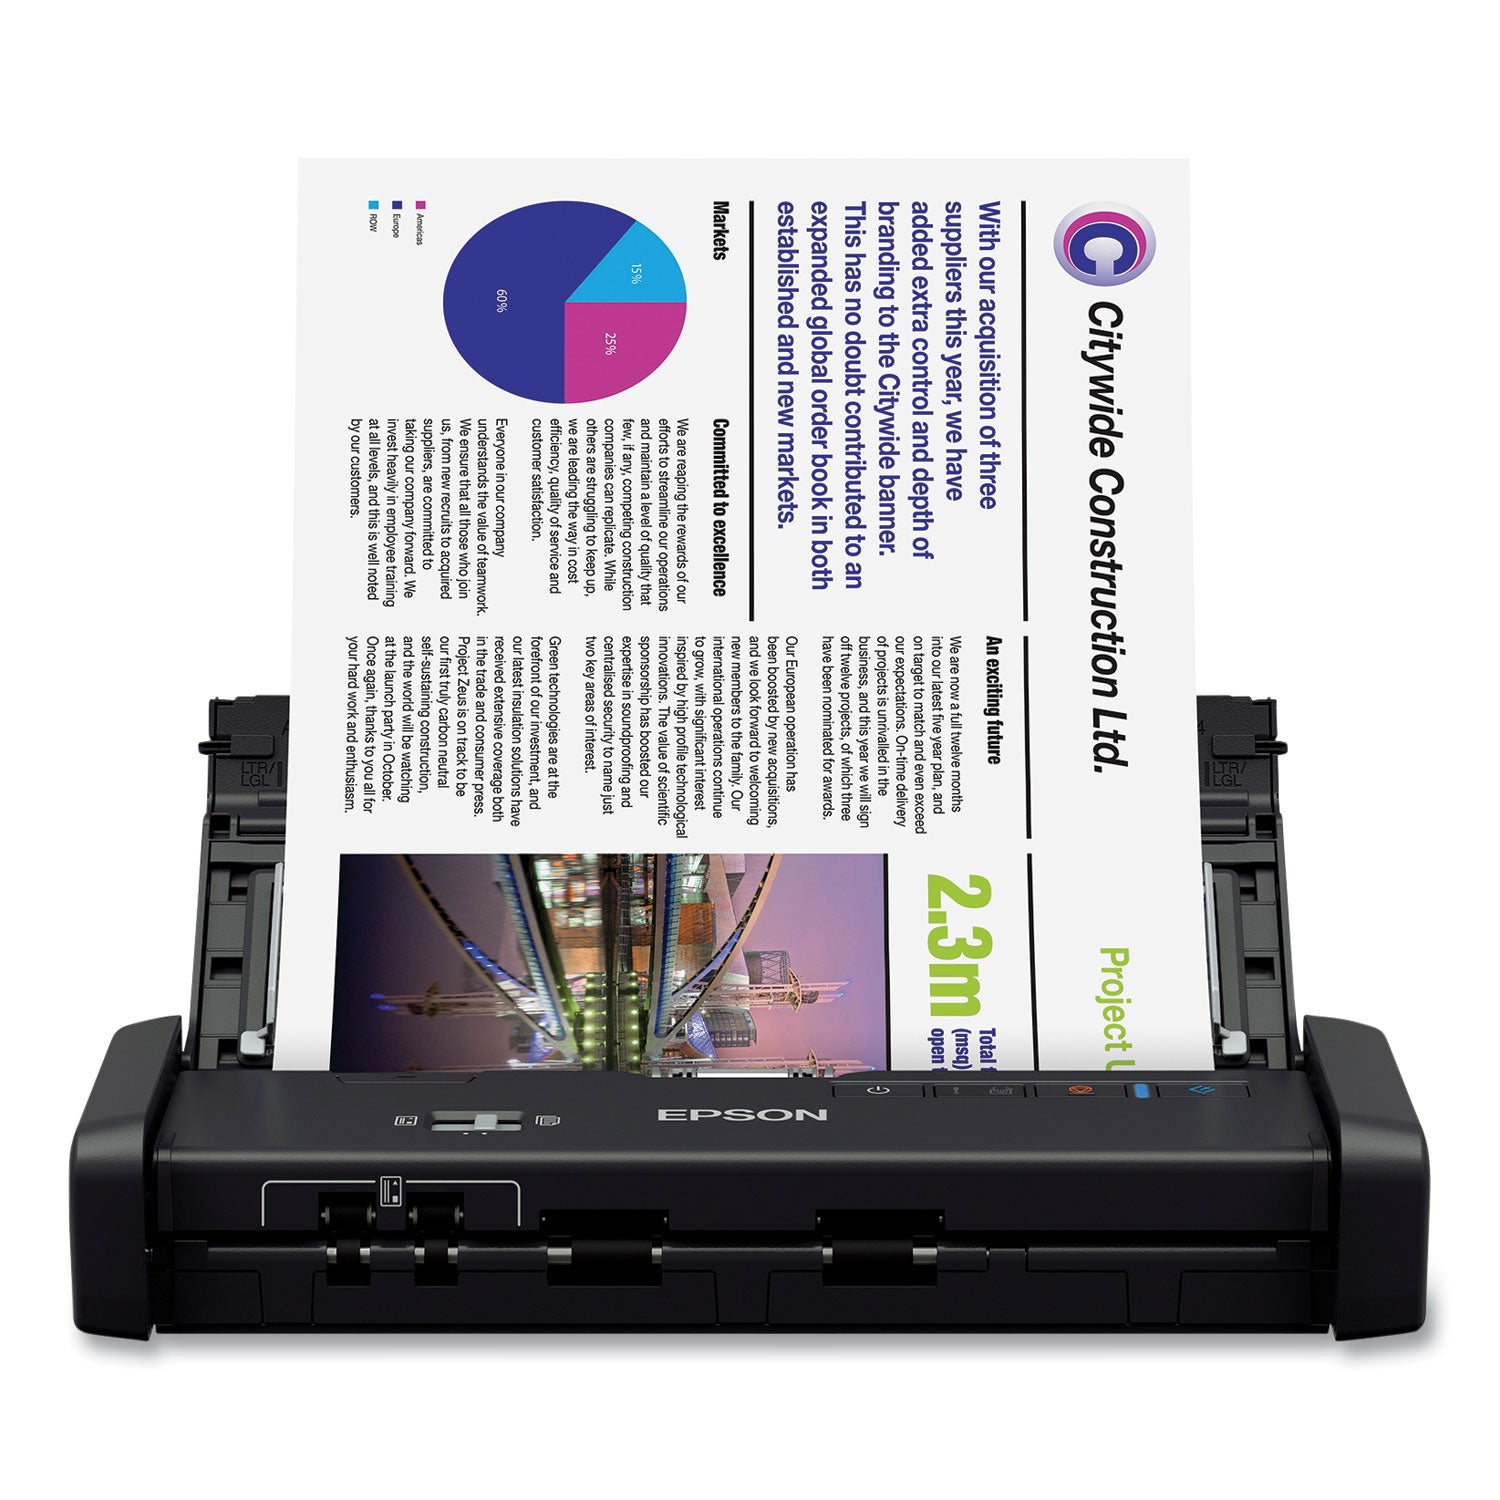 ds-320-portable-duplex-document-scanner-1200-dpi-optical-resolution-20-sheet-duplex-auto-document-feeder_epsb11b243201 - 1